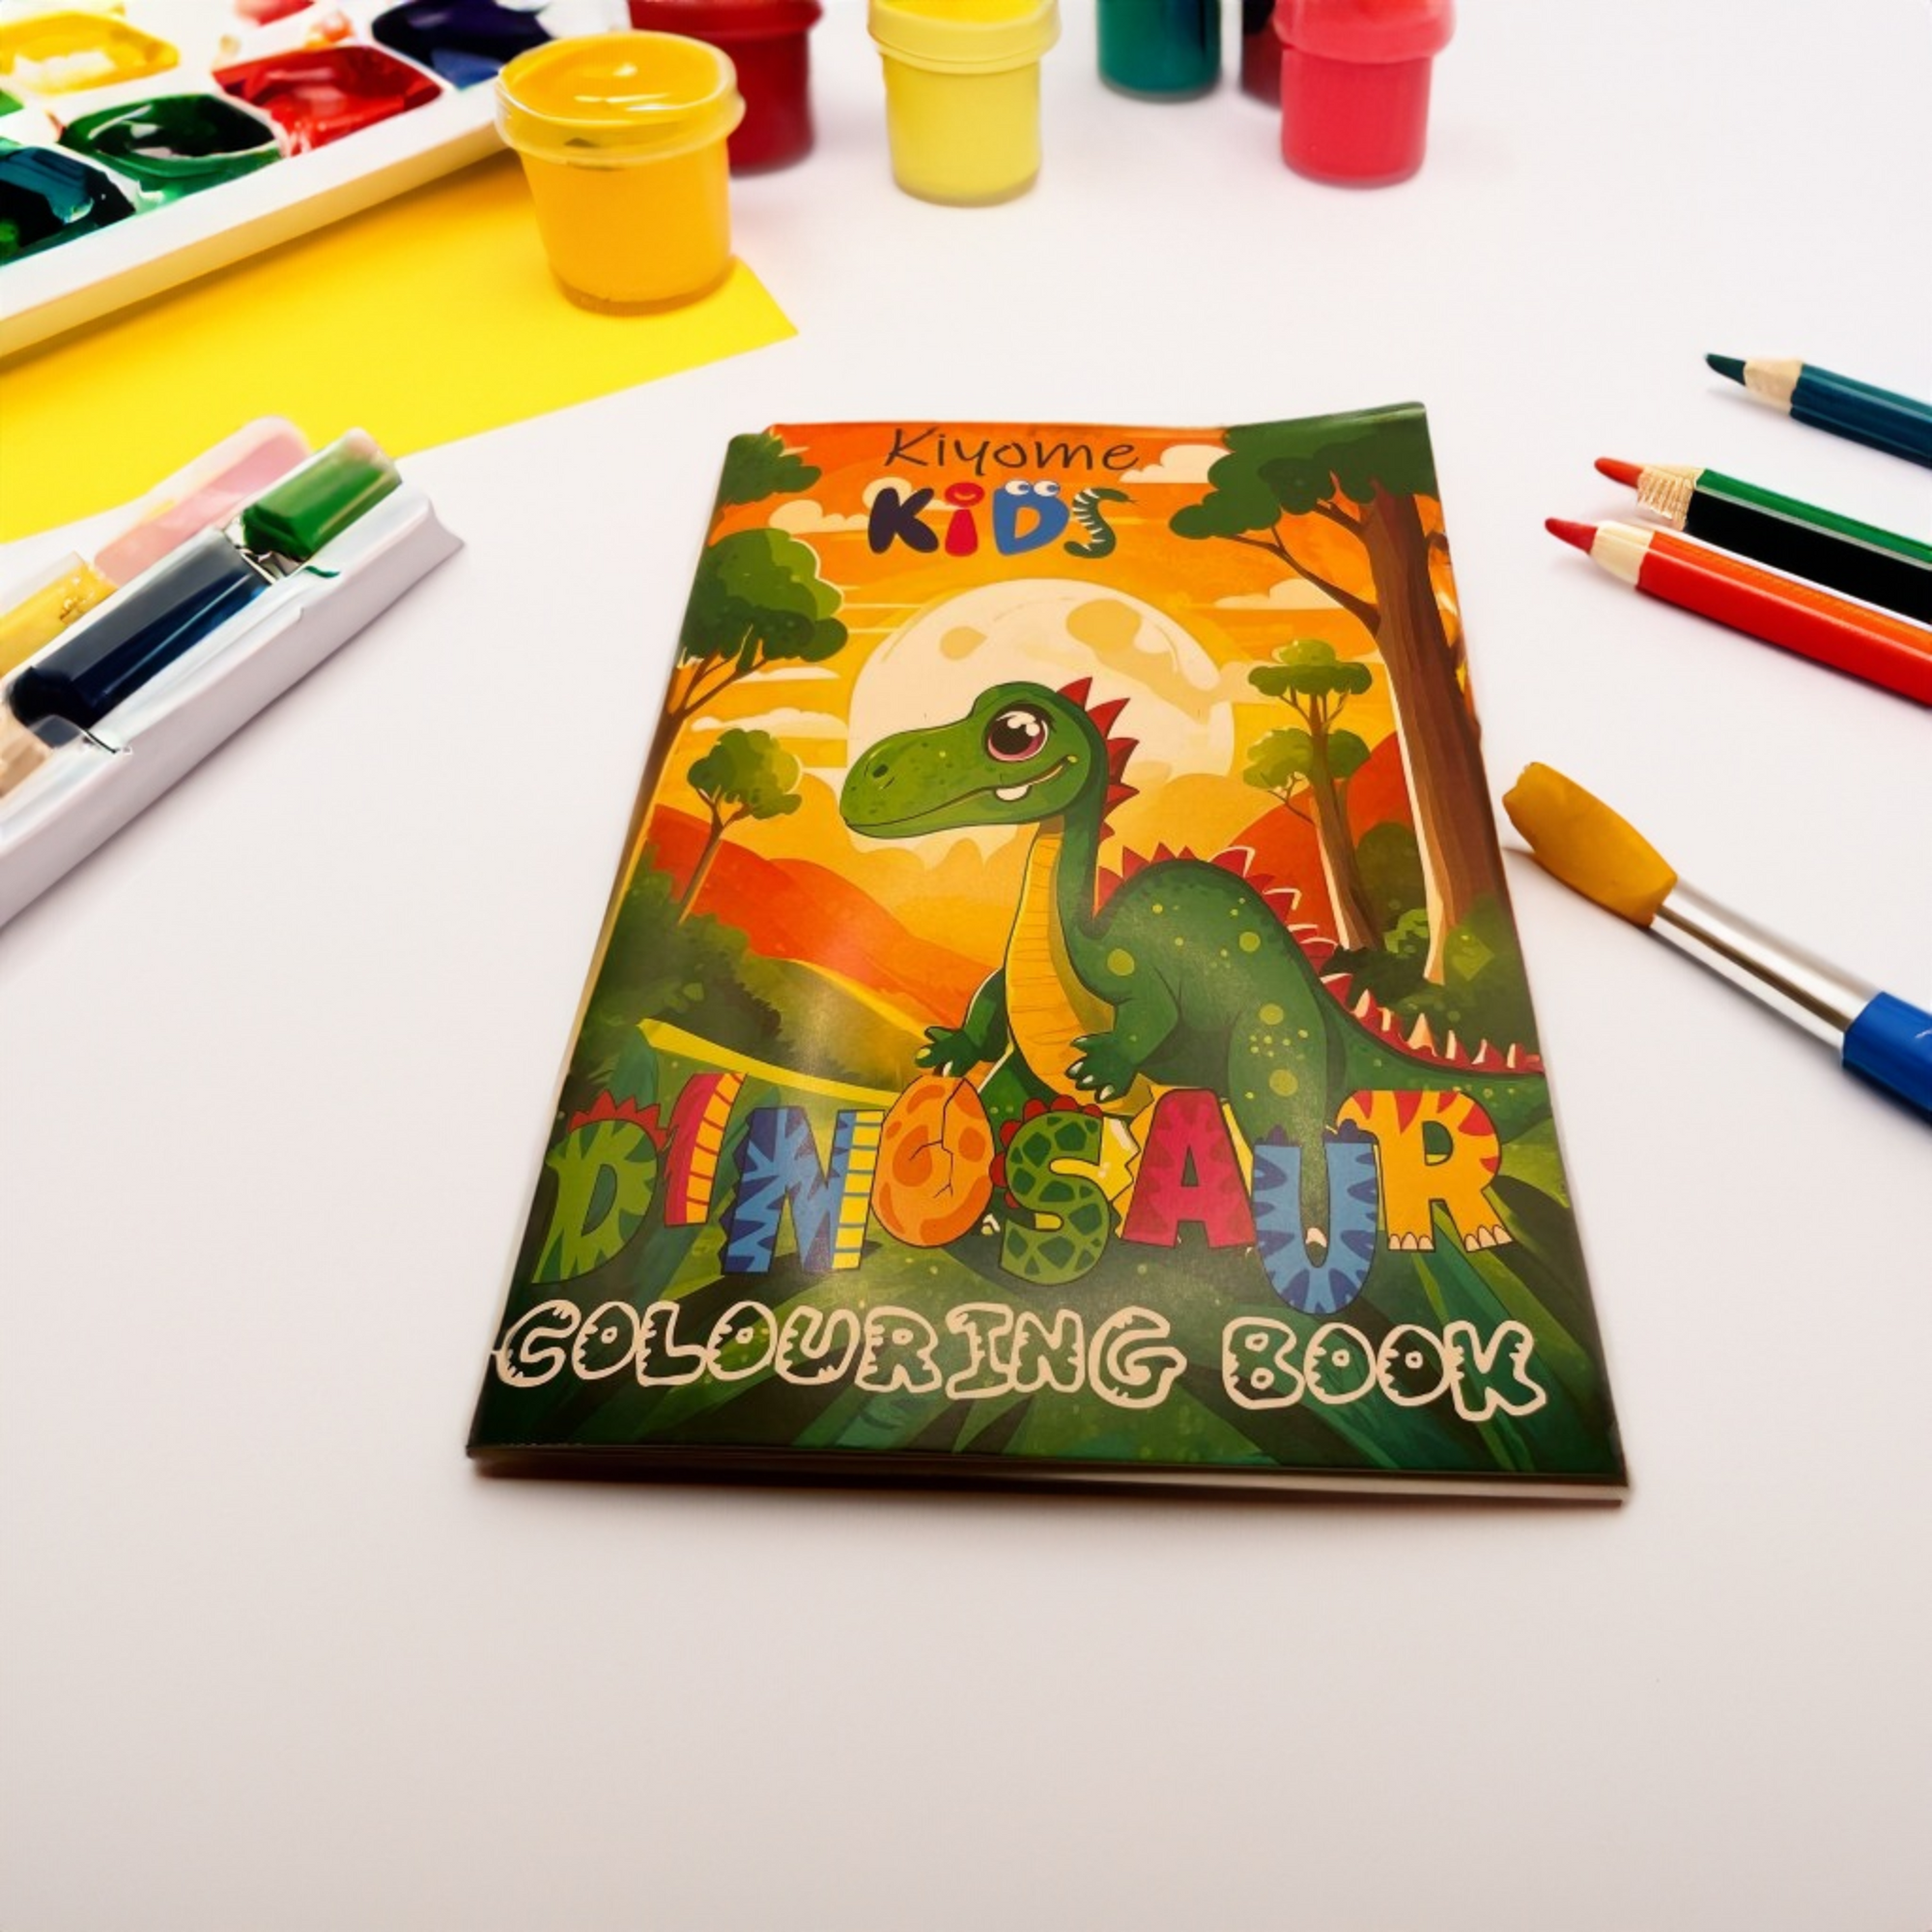 Kiyome Kids Dino Colouring Book